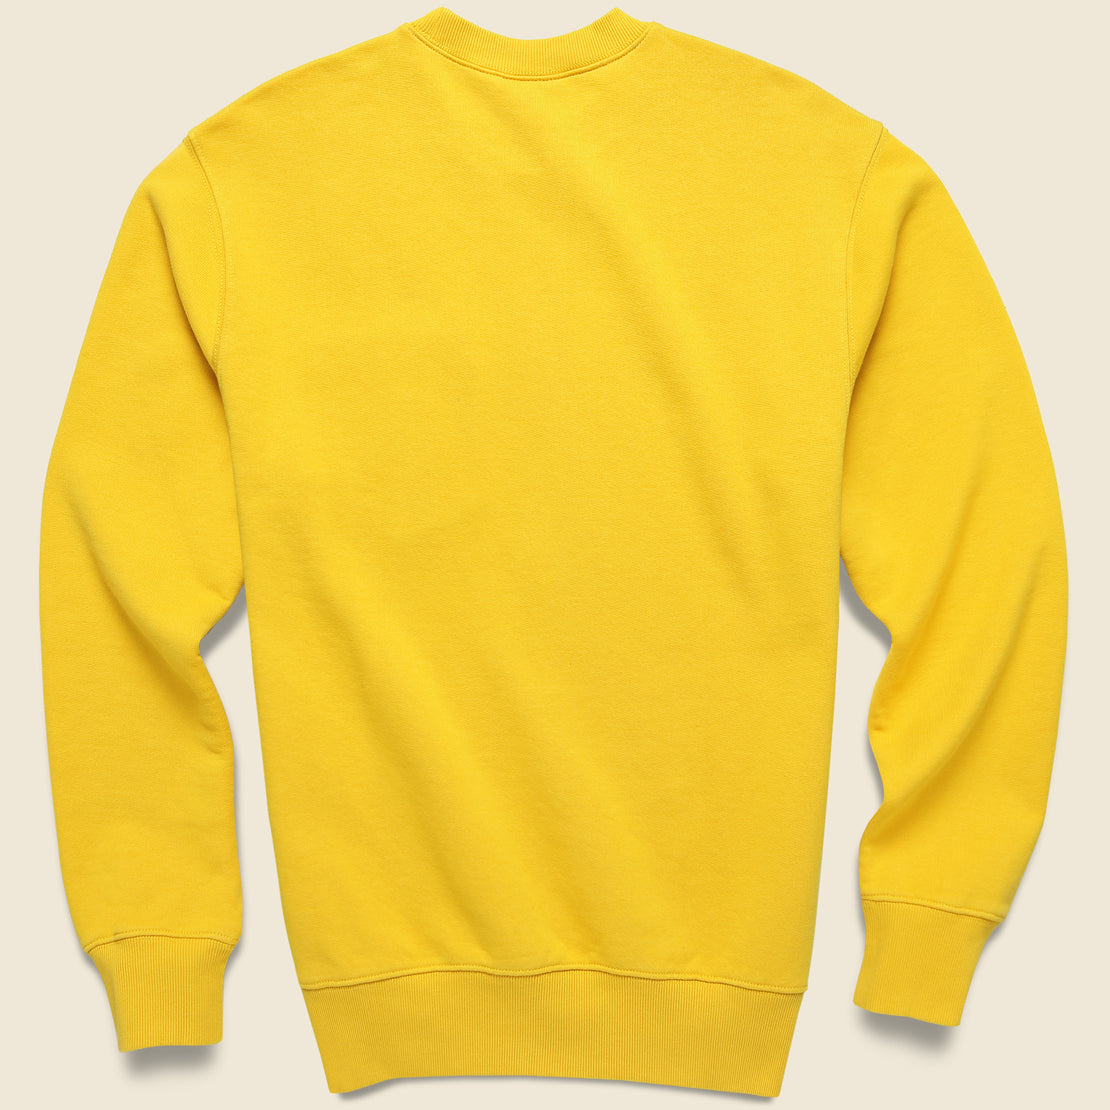 Pocket Sweatshirt - Popsicle - Carhartt WIP - STAG Provisions - Tops - Fleece / Sweatshirt